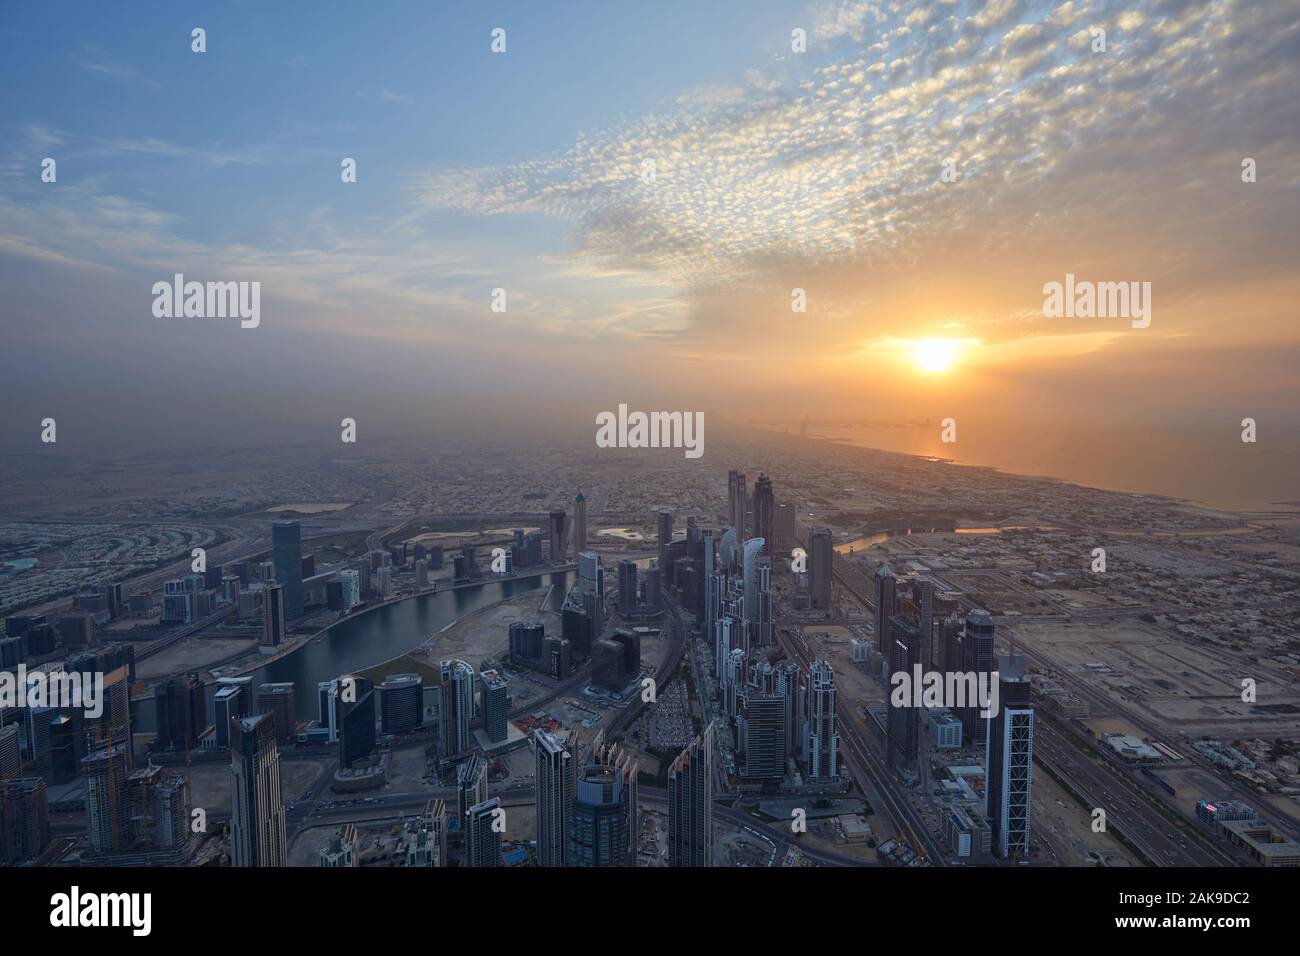 DUBAI, UNITED ARAB EMIRATES - NOVEMBER 19, 2019: Dubai city high angle view with skyscrapers at sunset seen from Burj Khalifa Stock Photo